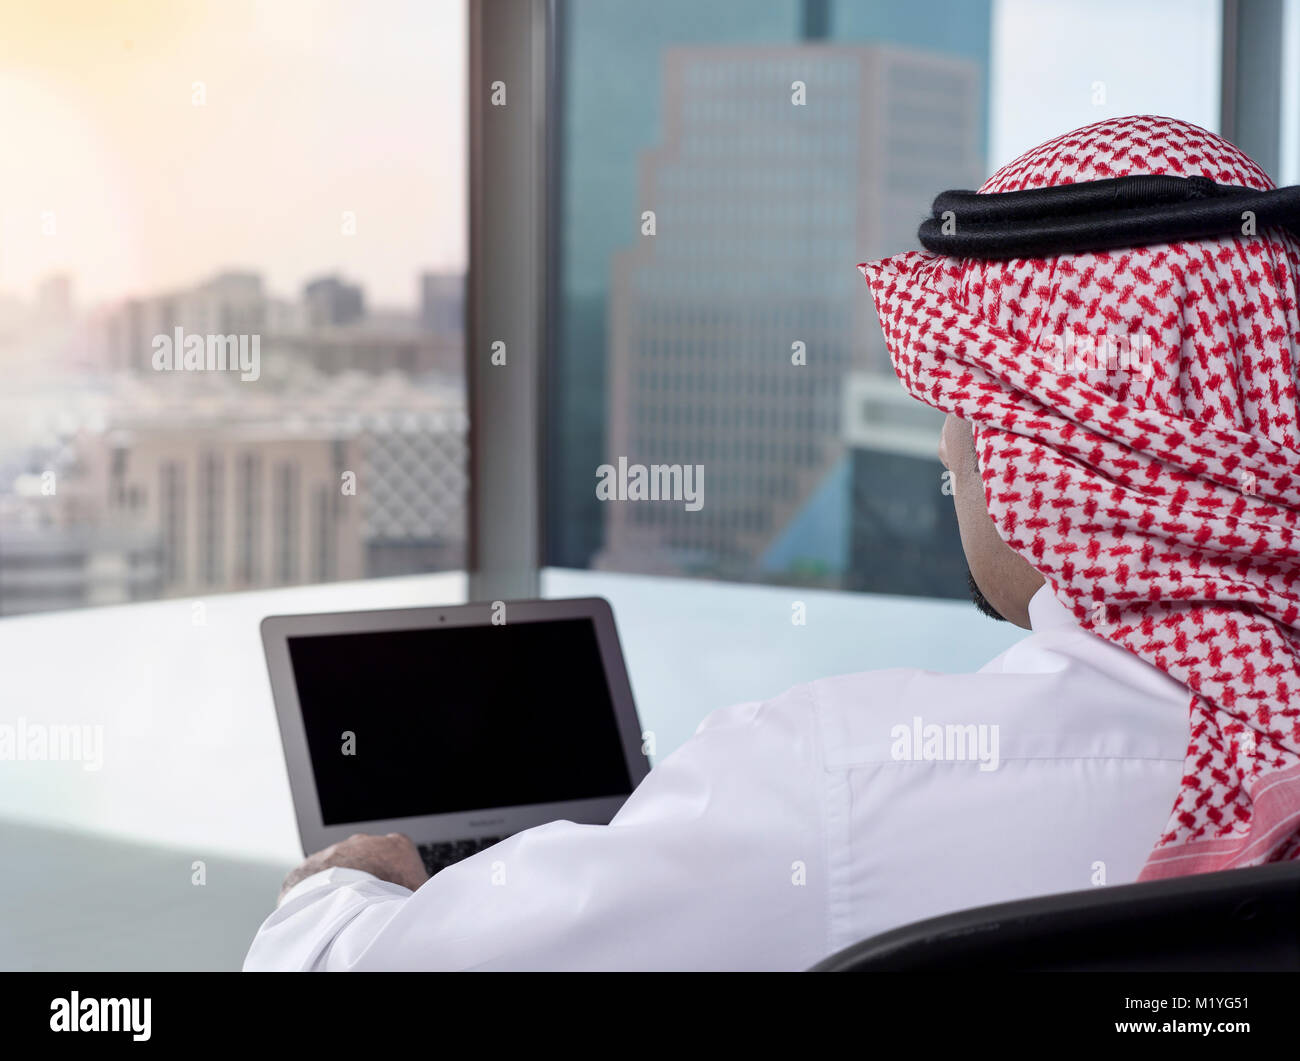 Saudi Arab Man Watching Laptop at Work and Contemplating Stock Photo